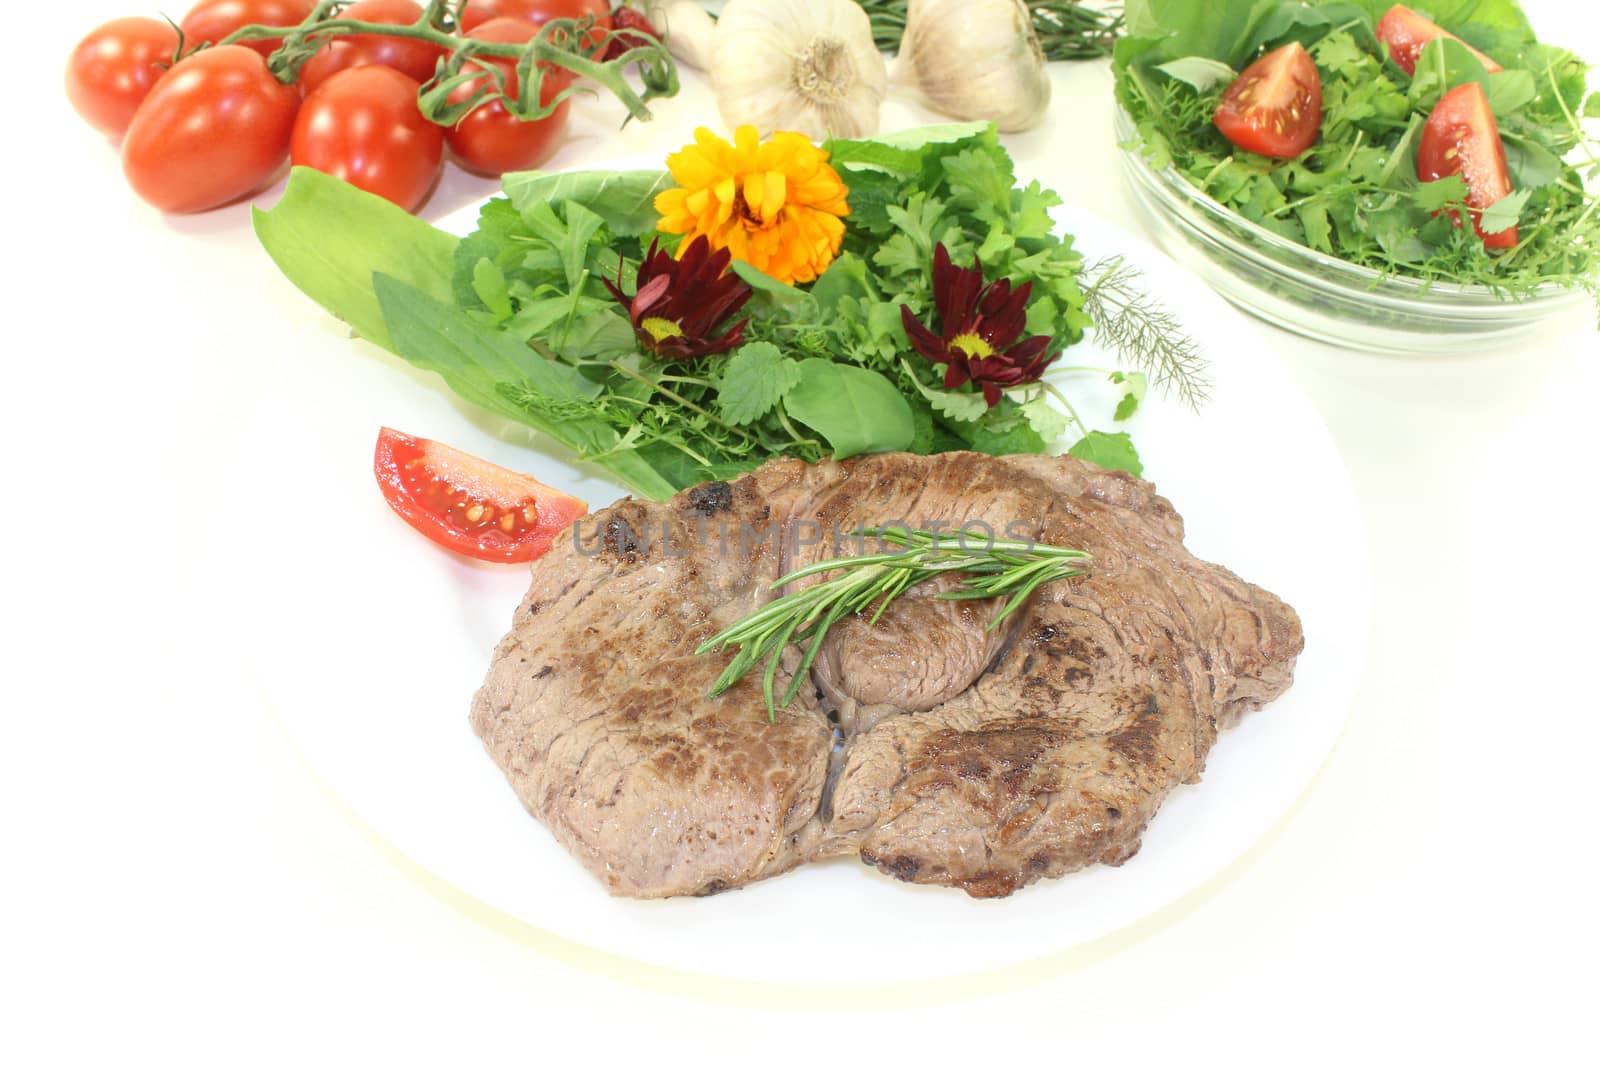 Sirloin steak with wild herb salad on a light background